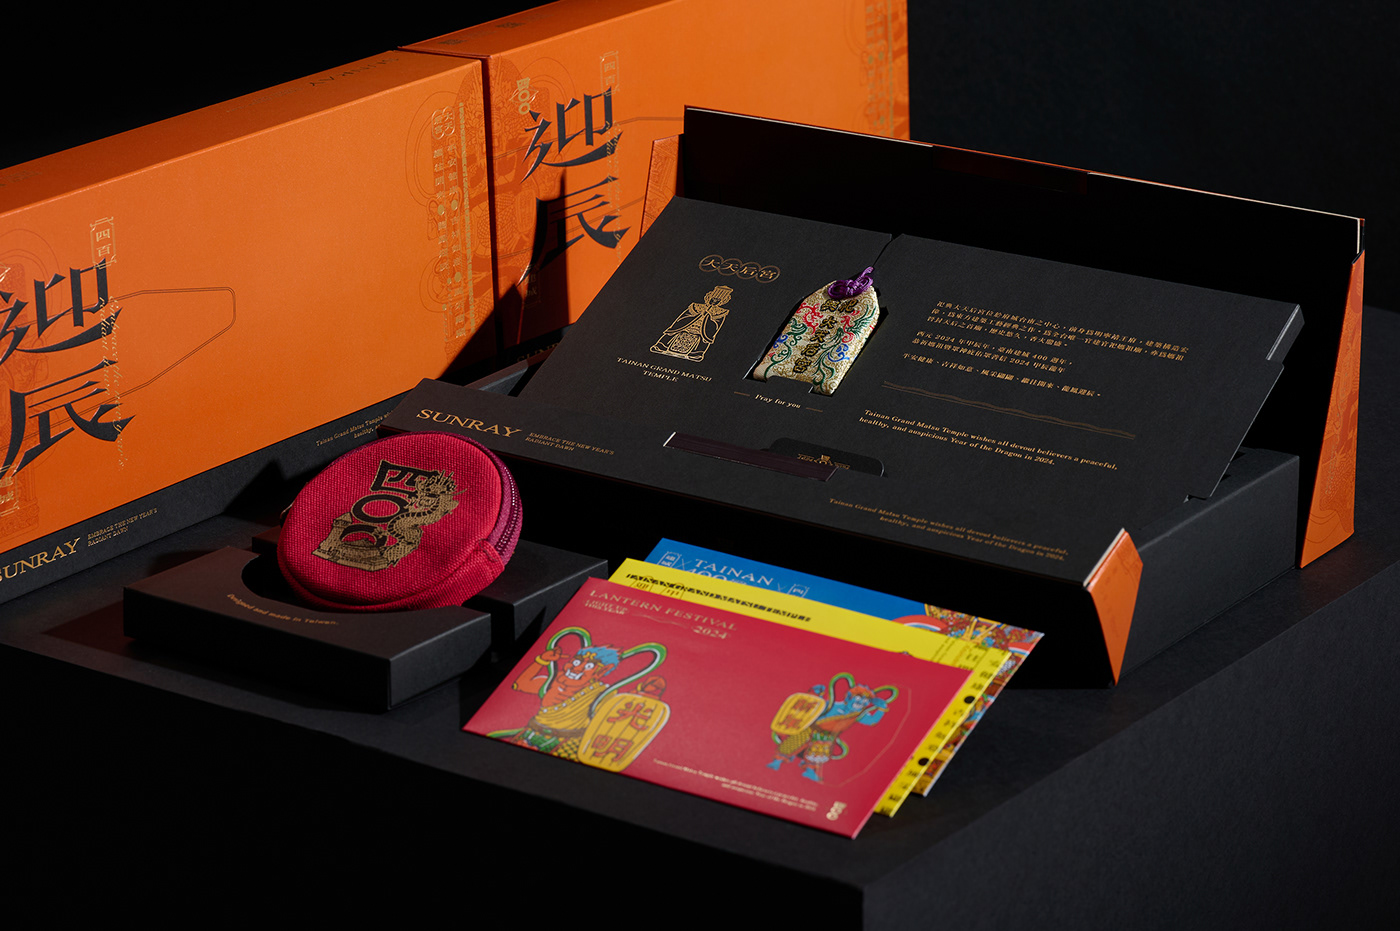 sunray 4W STUDIO Siwei Design artwork packaging design croter new year gift box აკადემია 冰雪场景